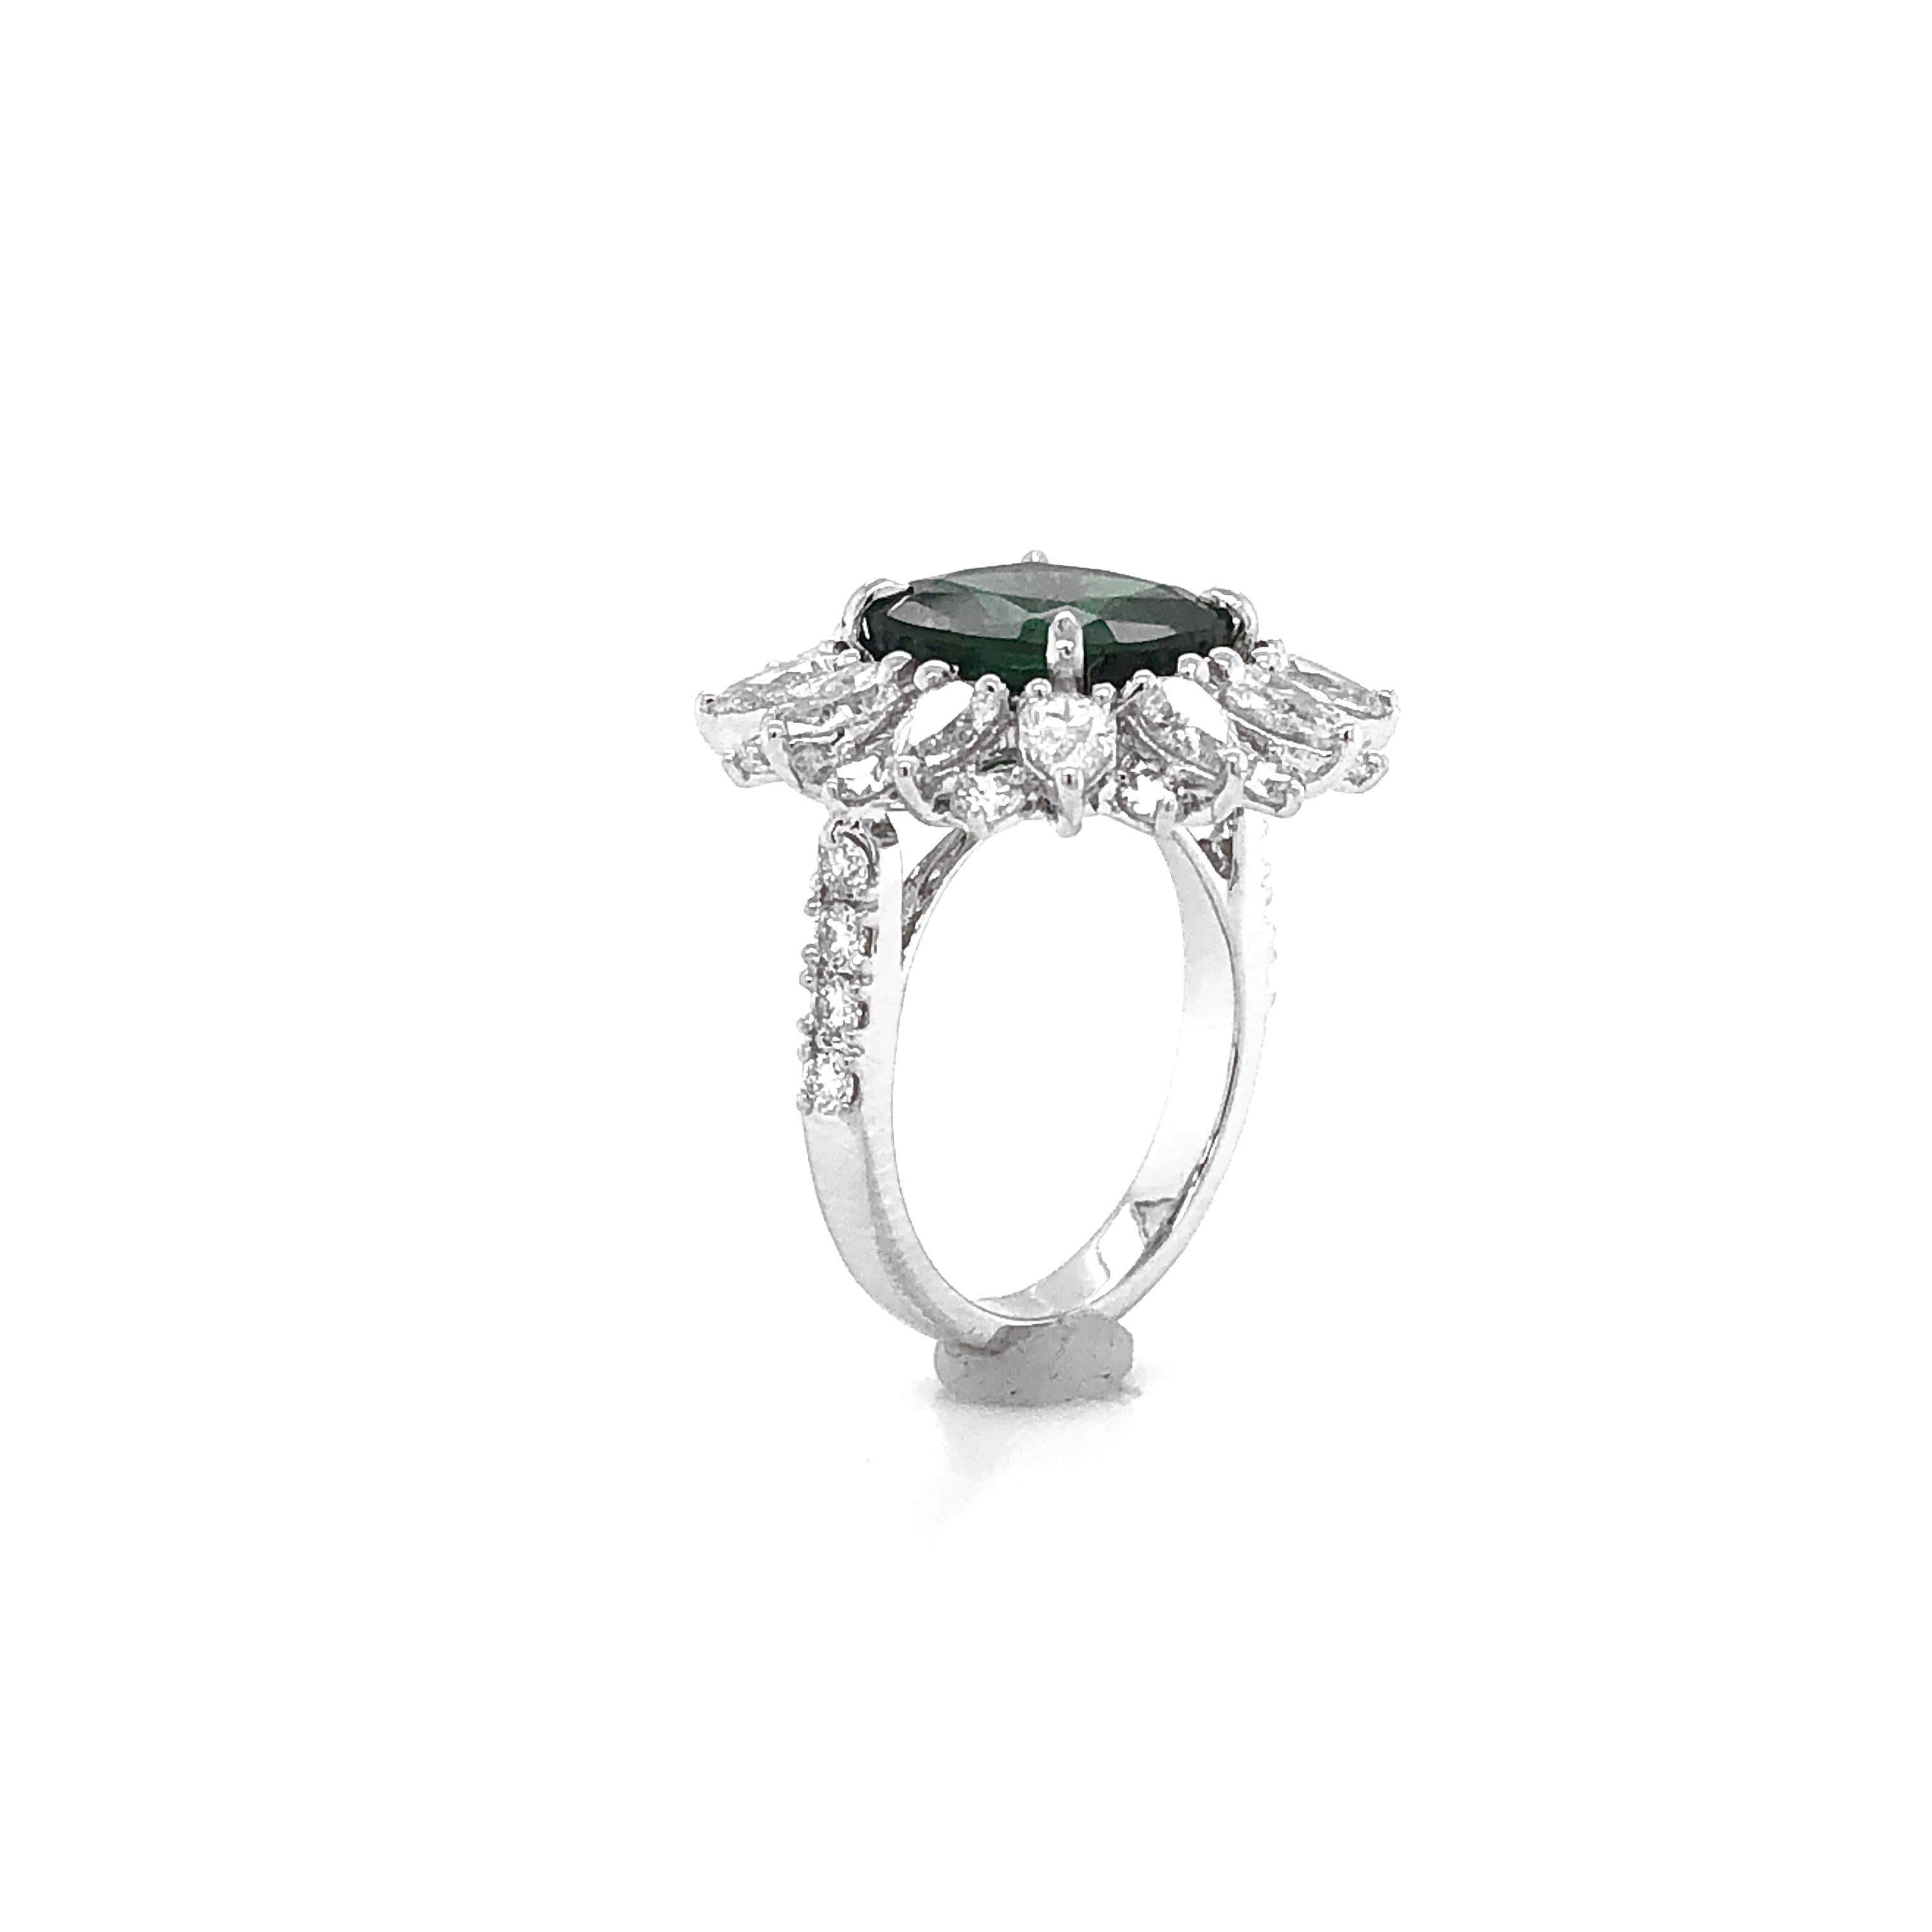 Certified Zambian Cushion Cut Emerald 3.13 Carat Diamond Platinum Cocktail Ring For Sale 3